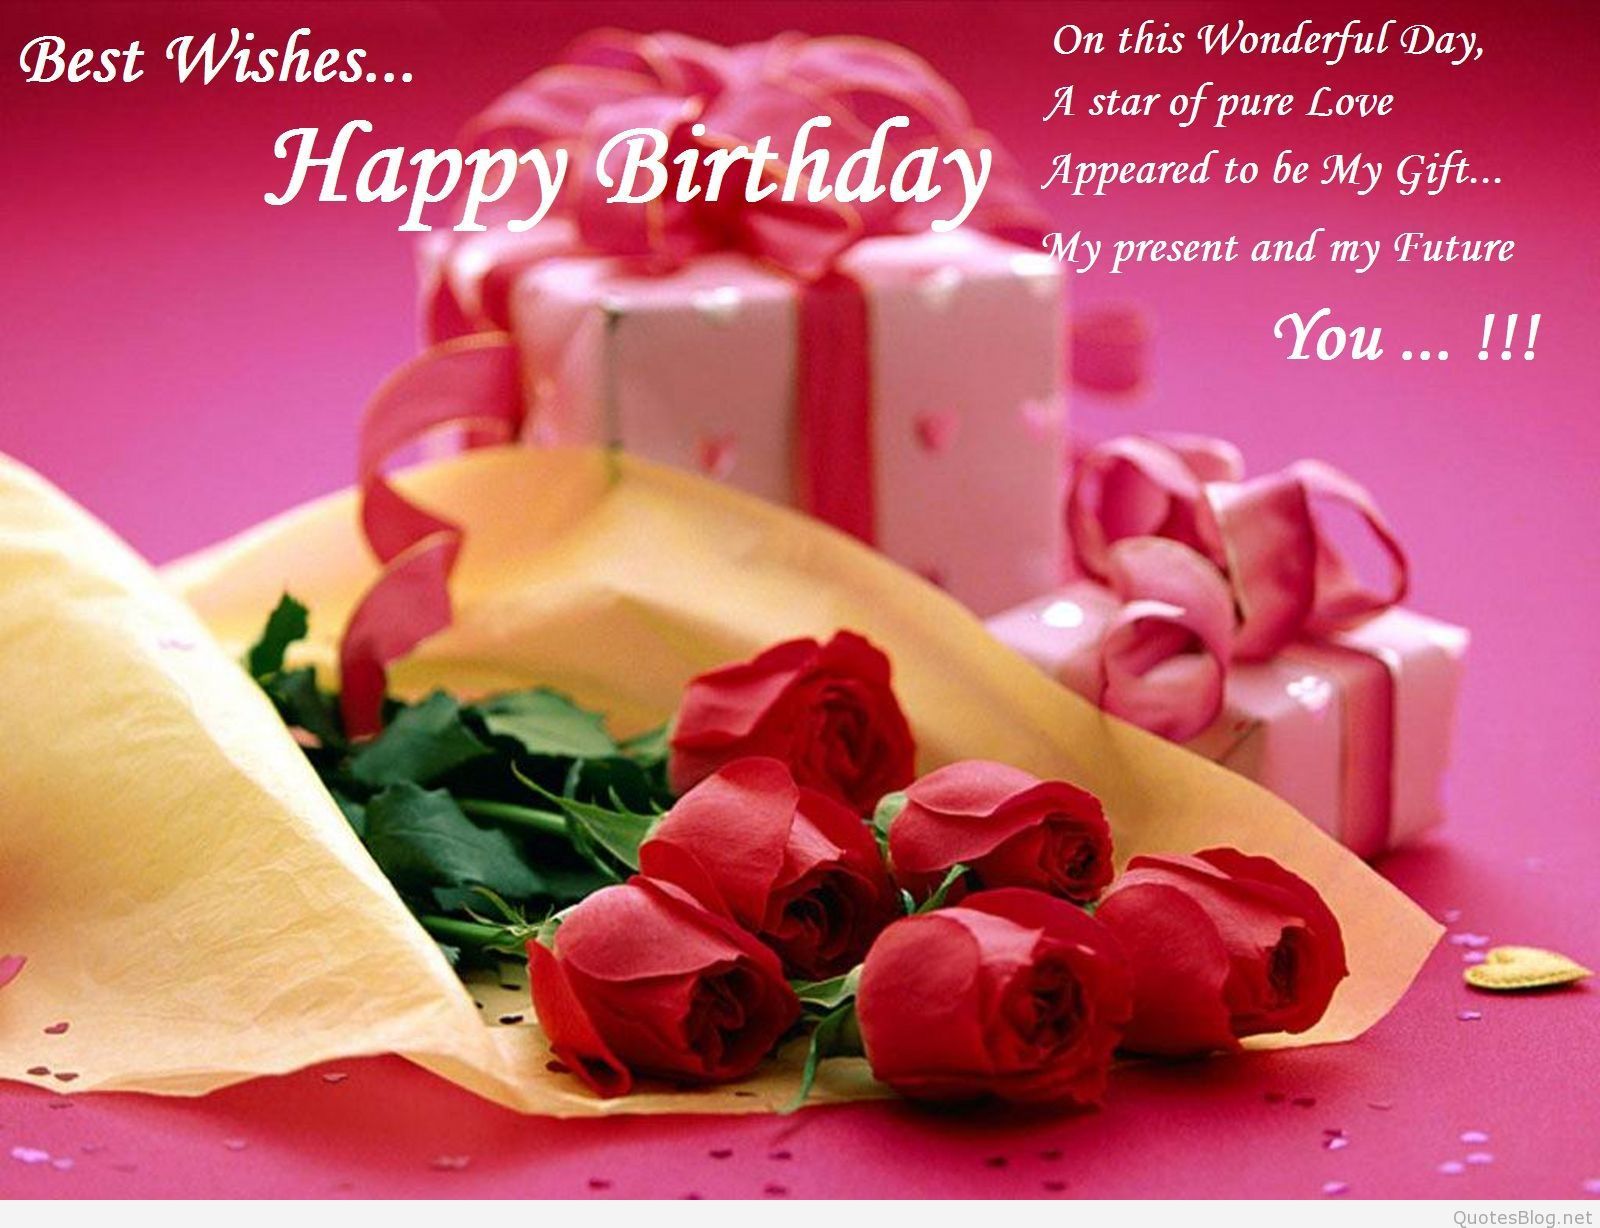 Happy Birthday Love Image Free Download. Happy birthday cards image, Birthday cards image, Birthday wishes